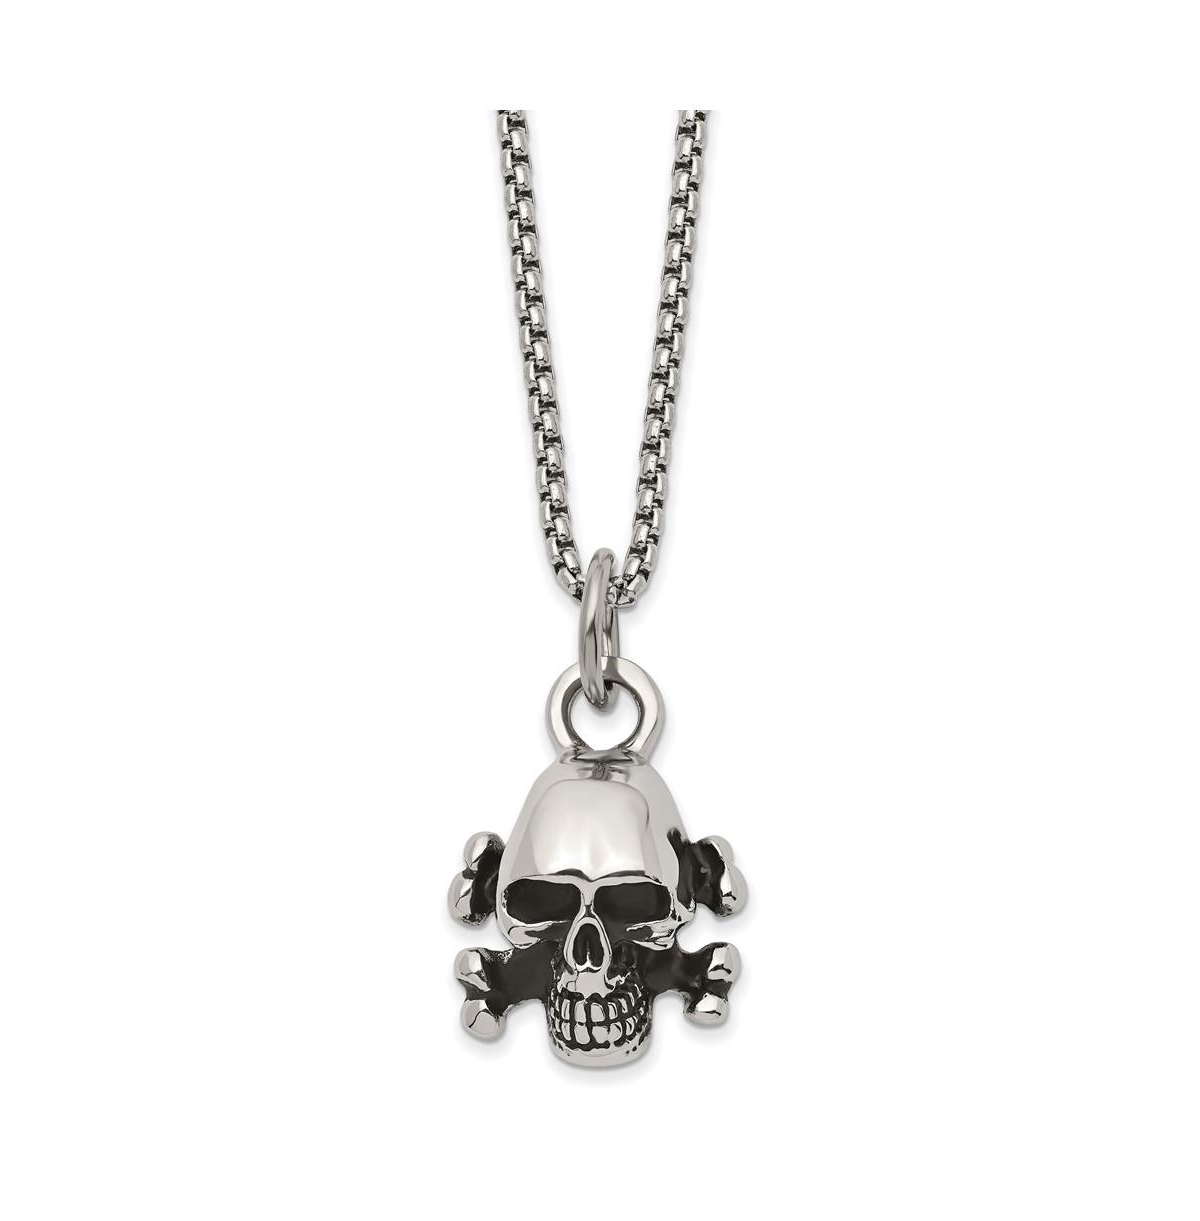 Antiqued Skull and Cross Bones Pendant Box Chain Necklace - Black